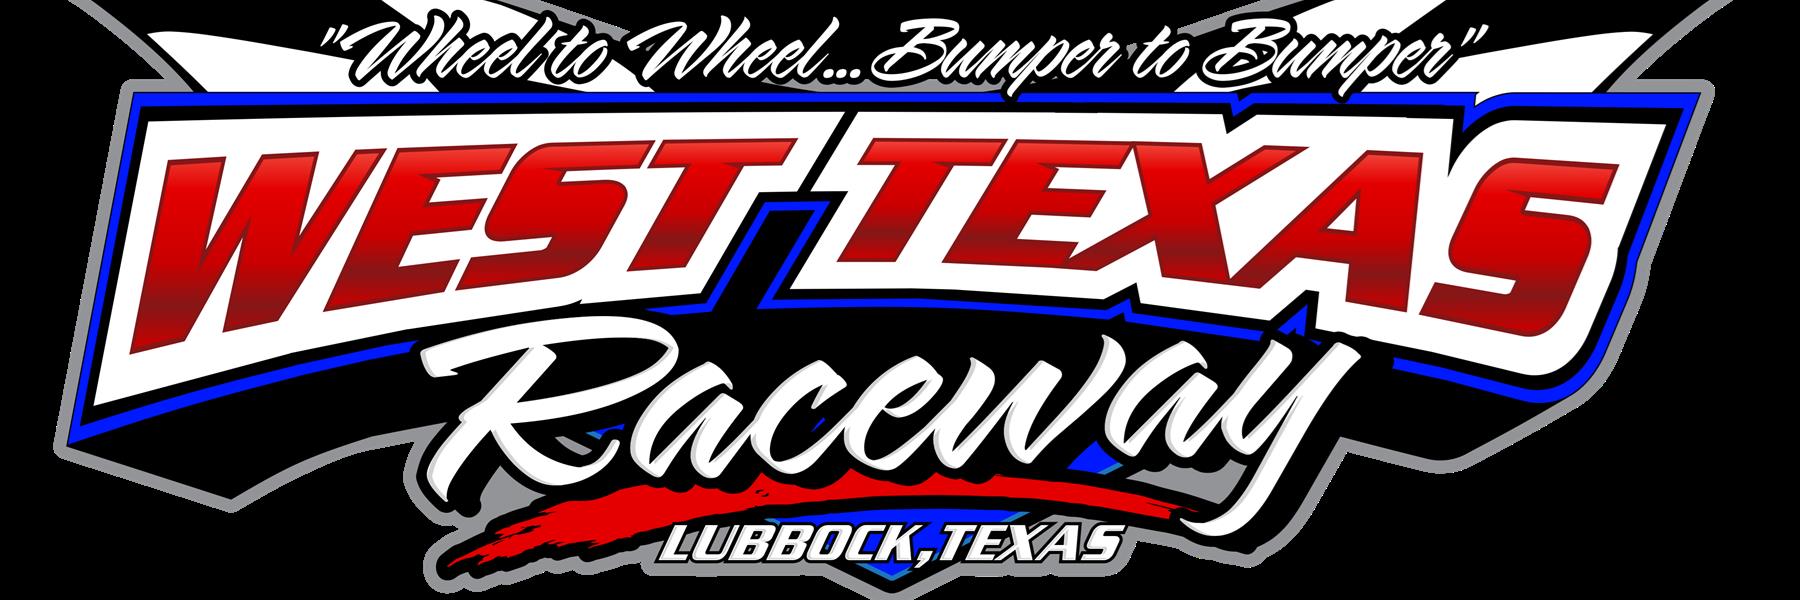 7/30/2021 - West Texas Raceway